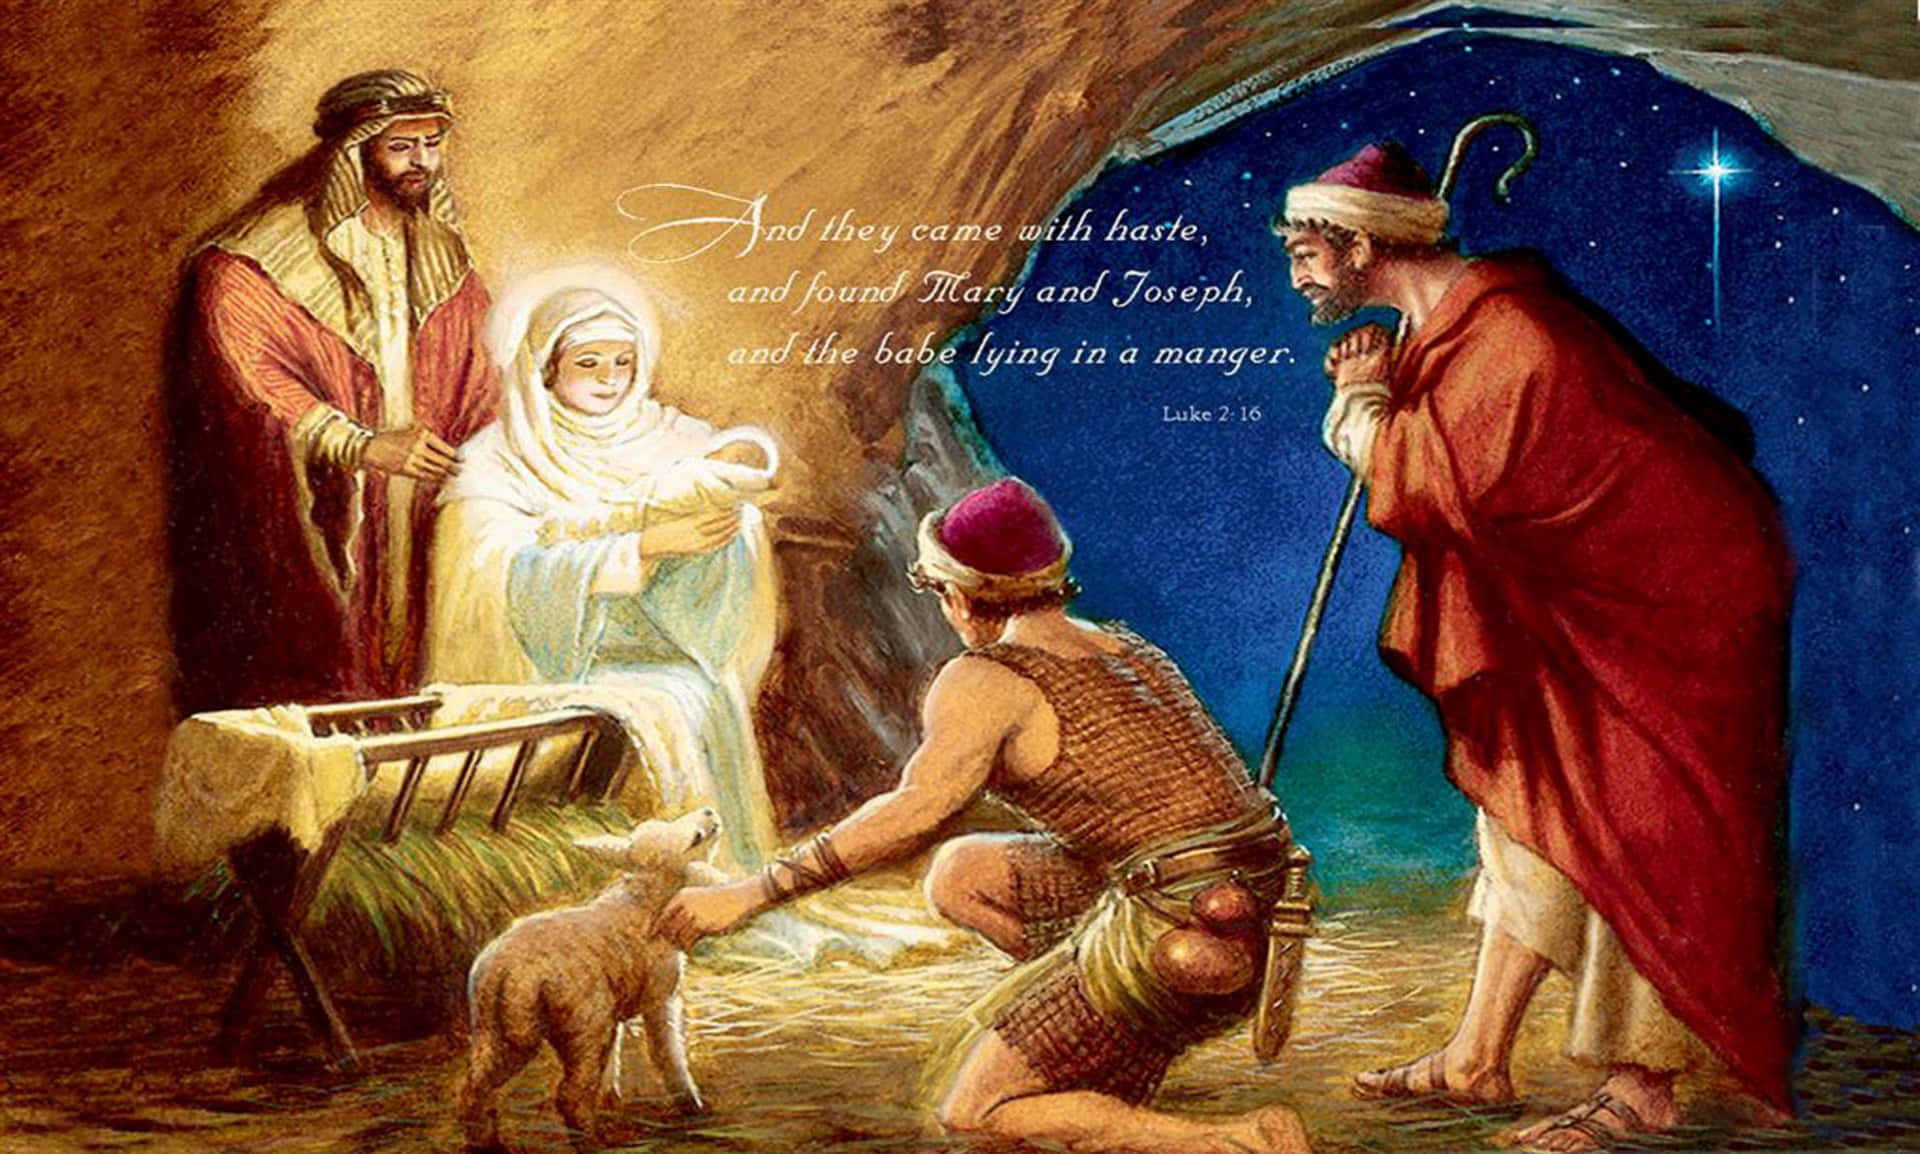 A beautiful illustration of the nativity